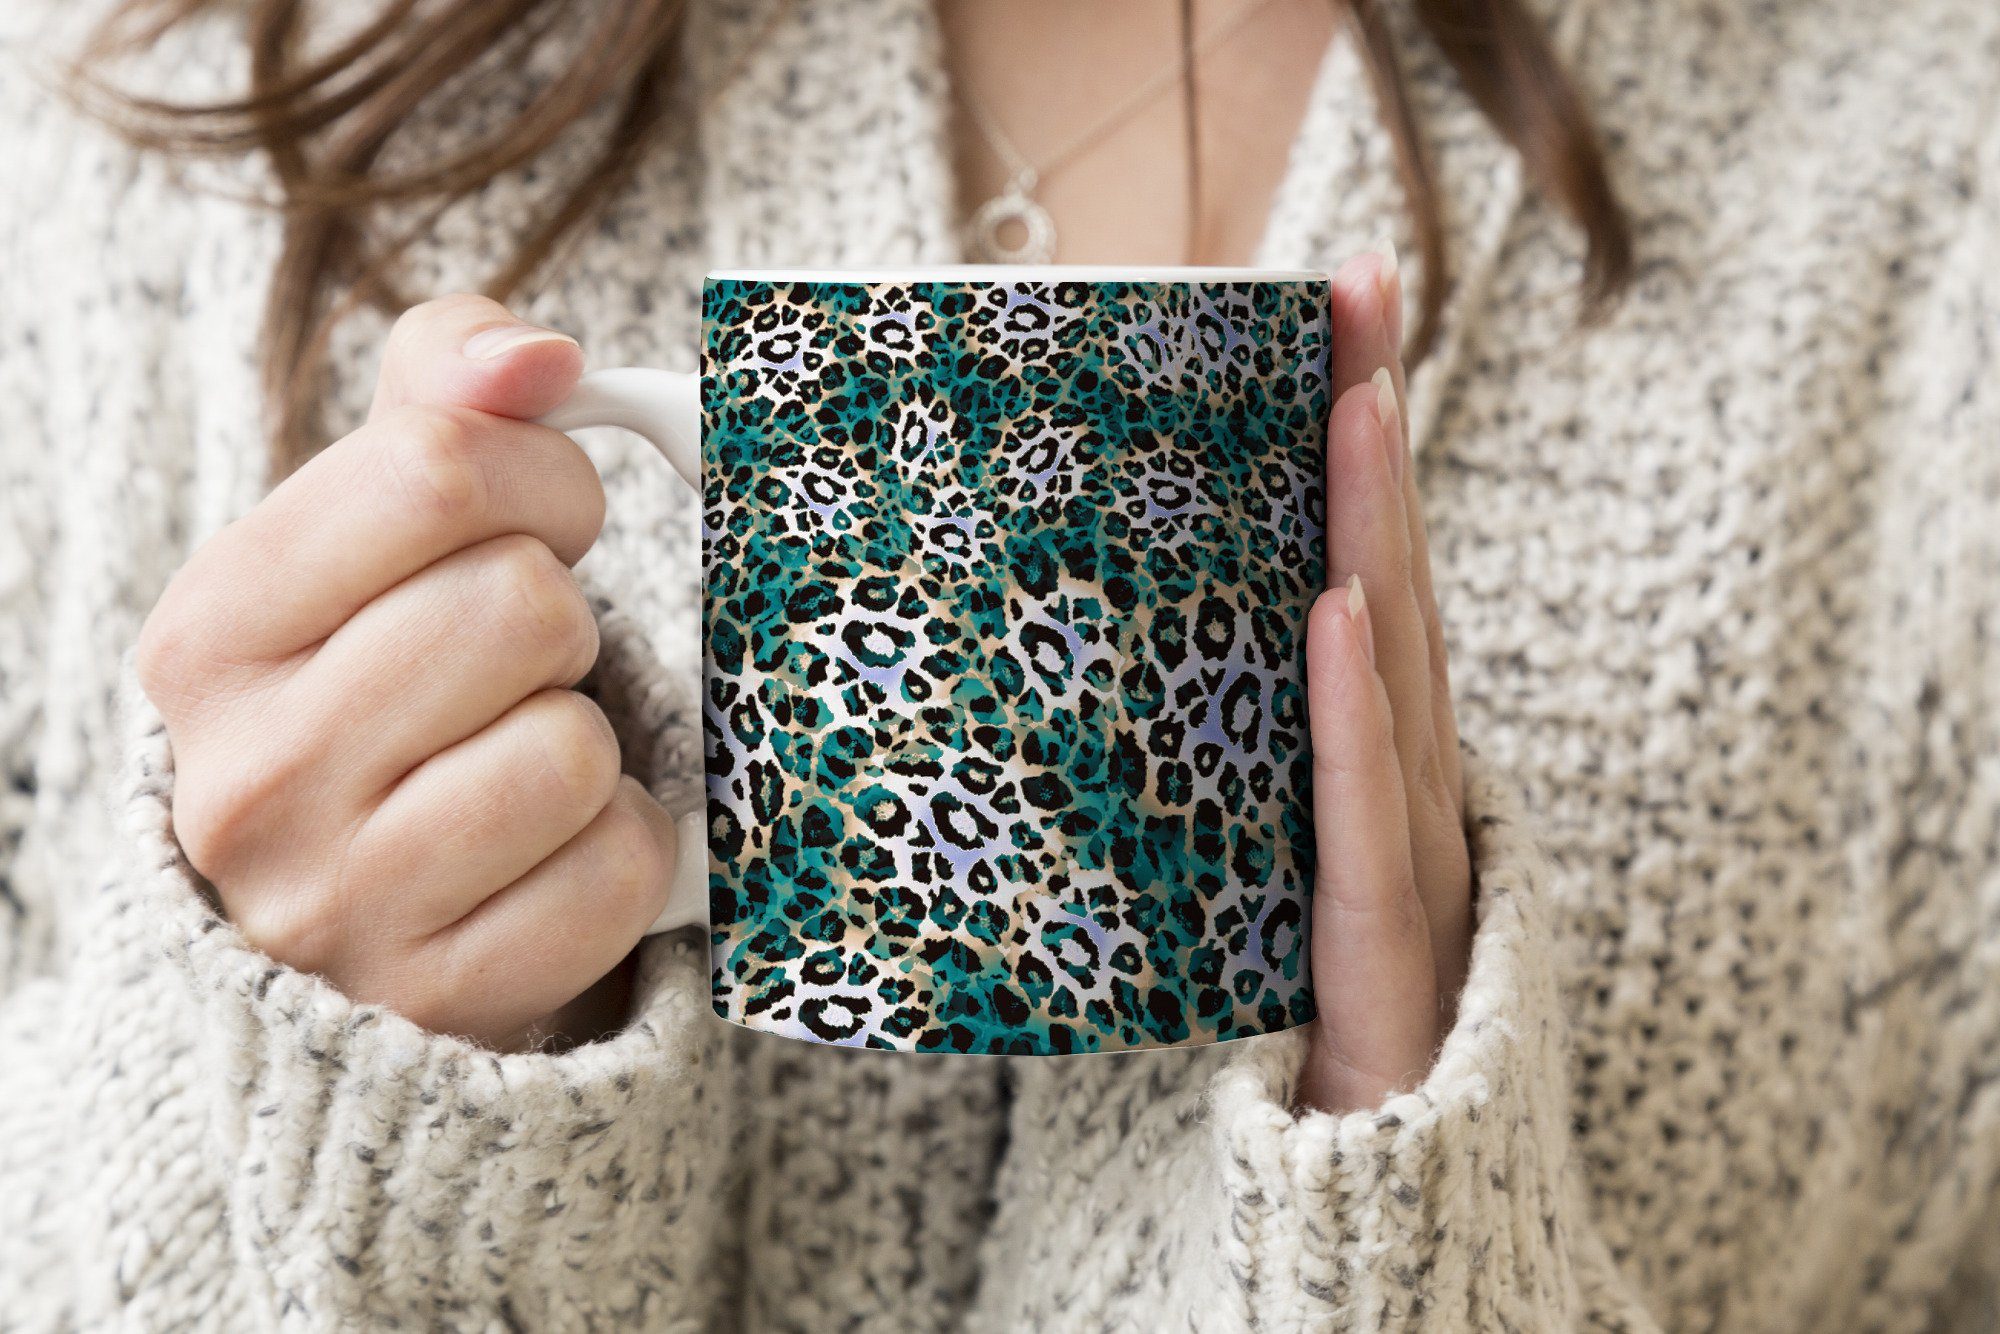 MuchoWow Tasse Leopard Geschenk Muster Kaffeetassen, Blau, - Becher, Teetasse, Teetasse, Keramik, 